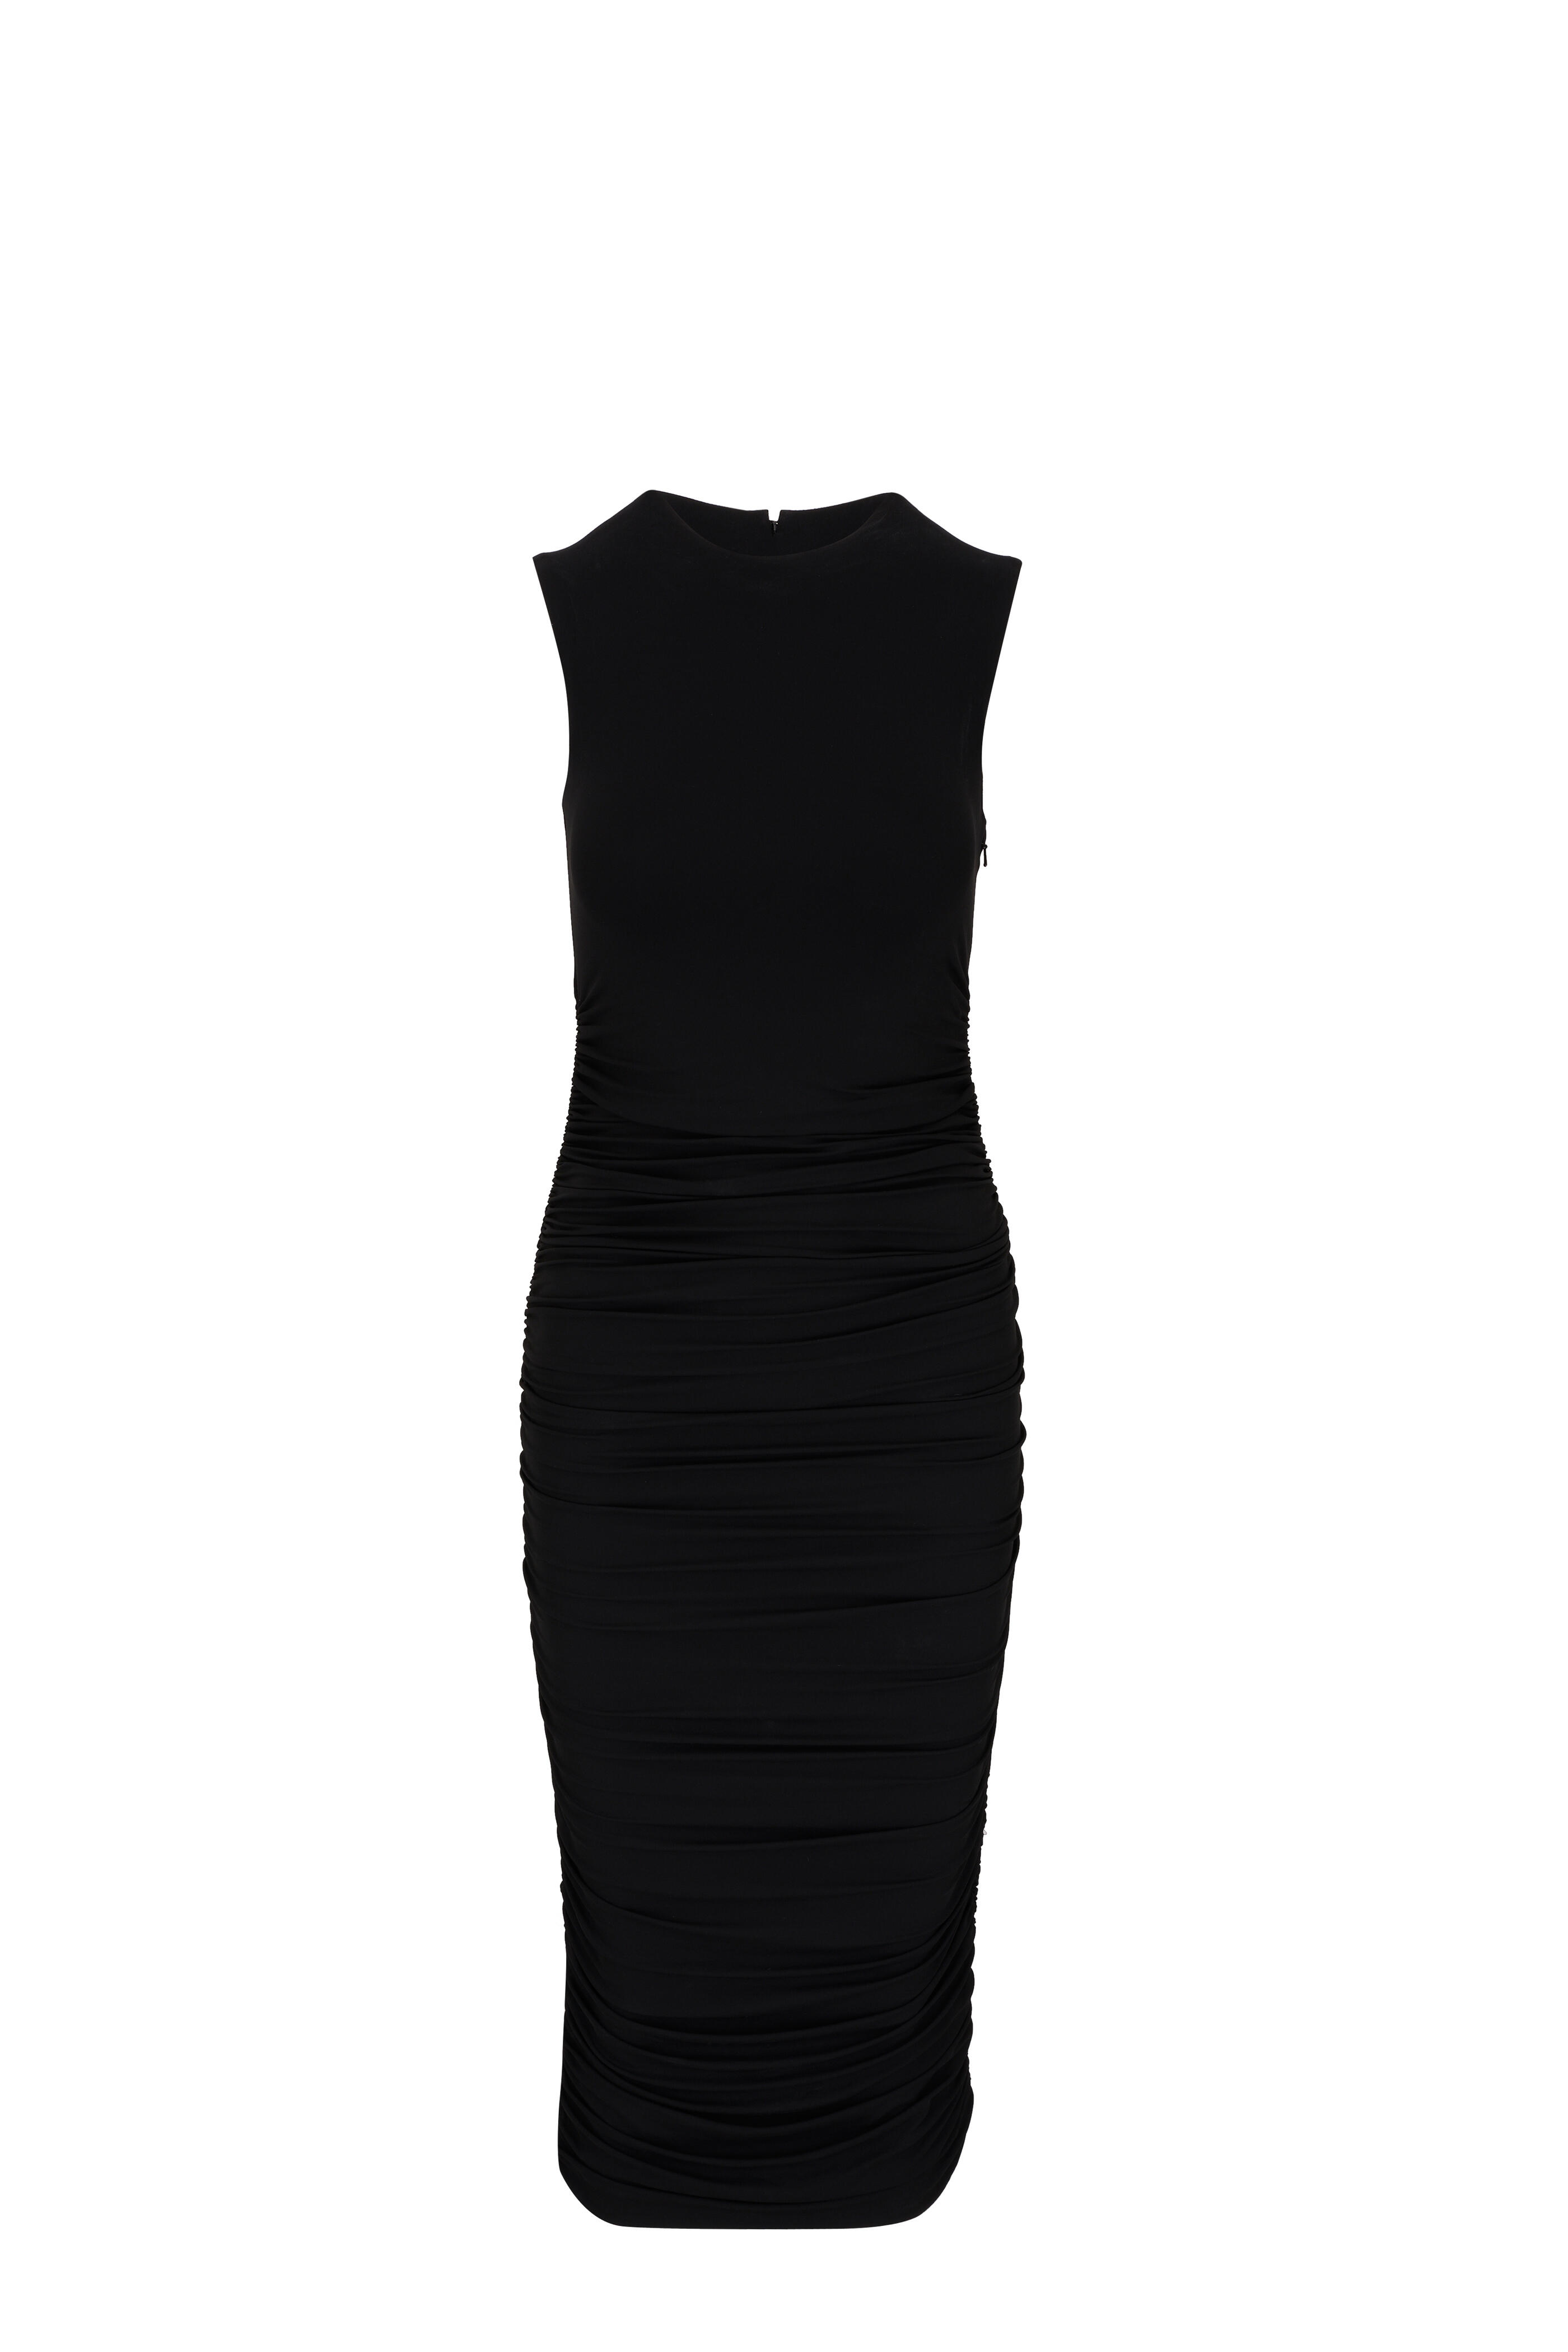 Michael Kors Collection - Black Sleeveless Ruched Midi Dress